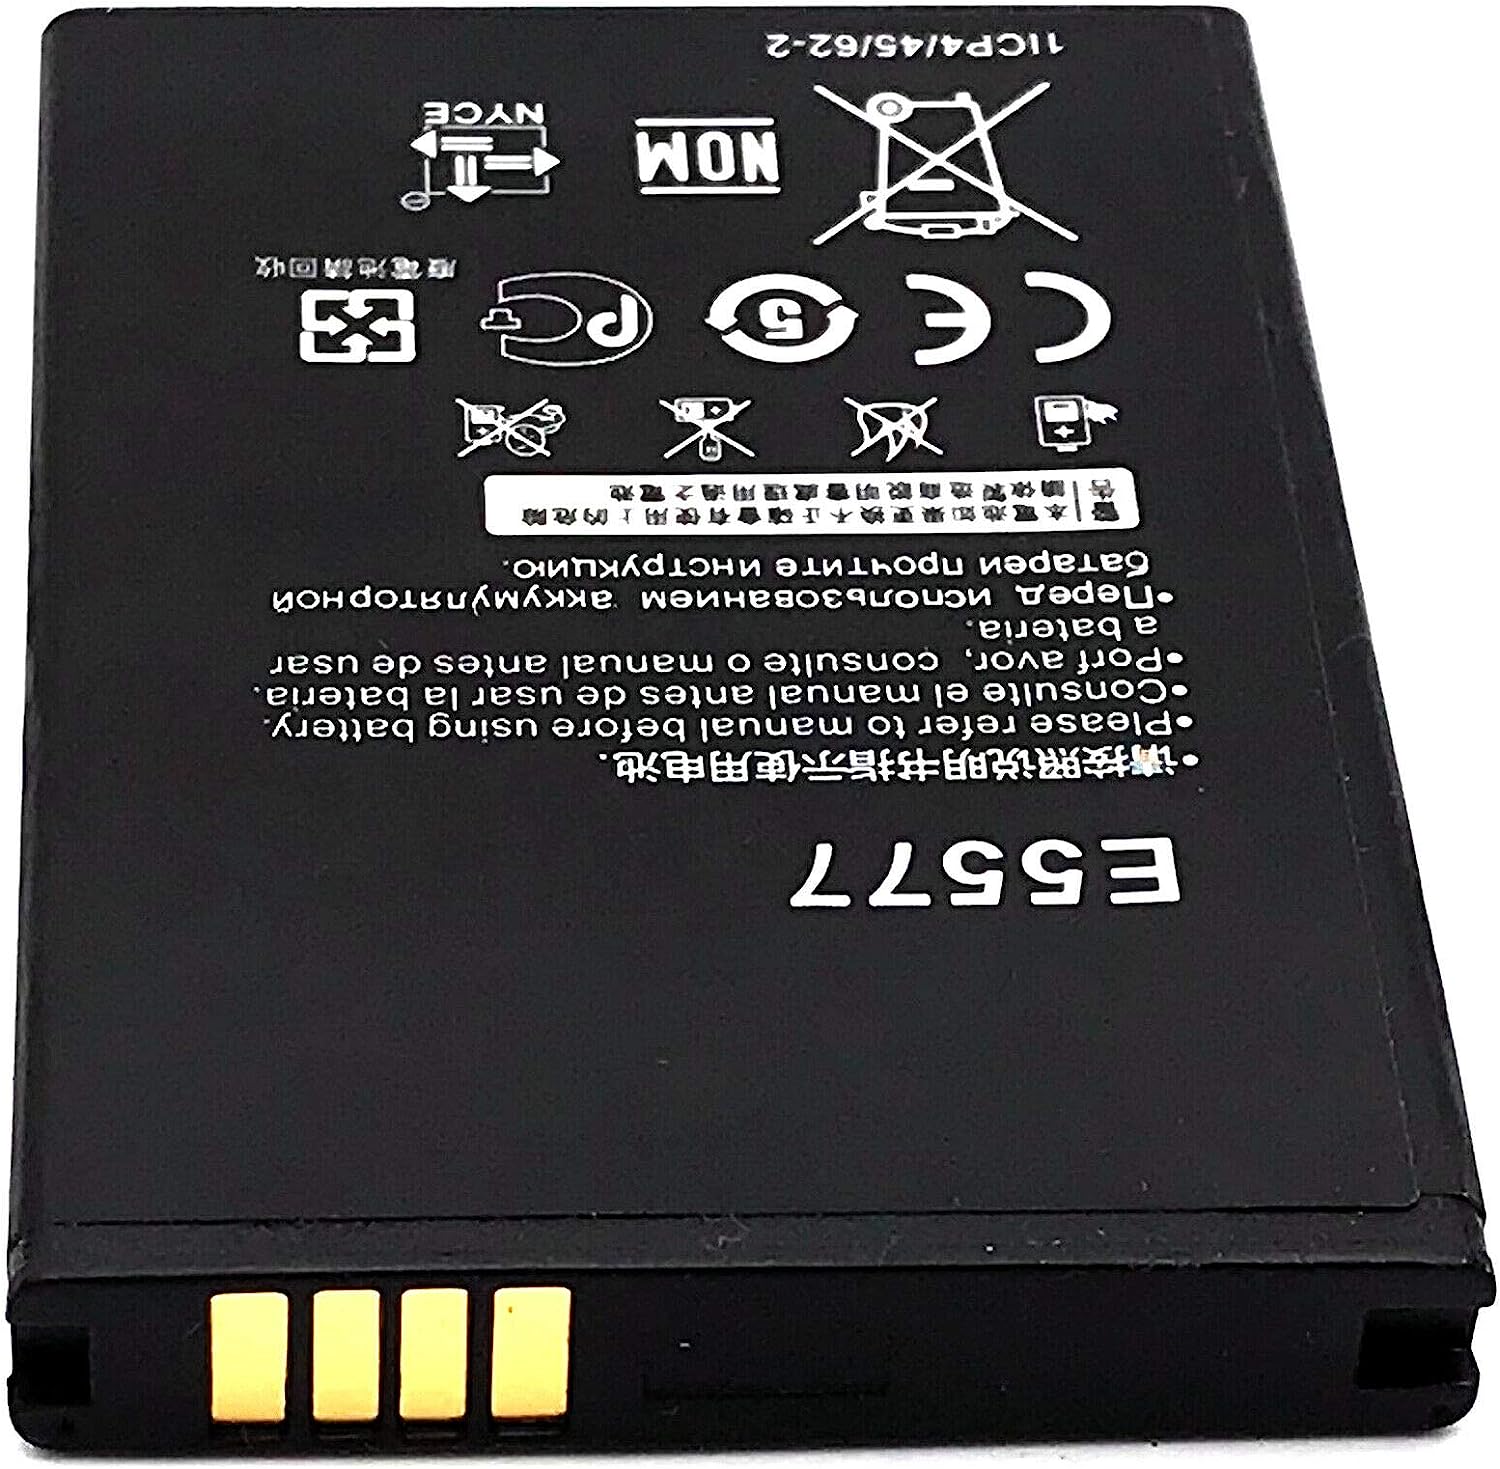 Huawei 3000mAh Internal Li-ion Battery | Mobile & Accessories | Halabh.com